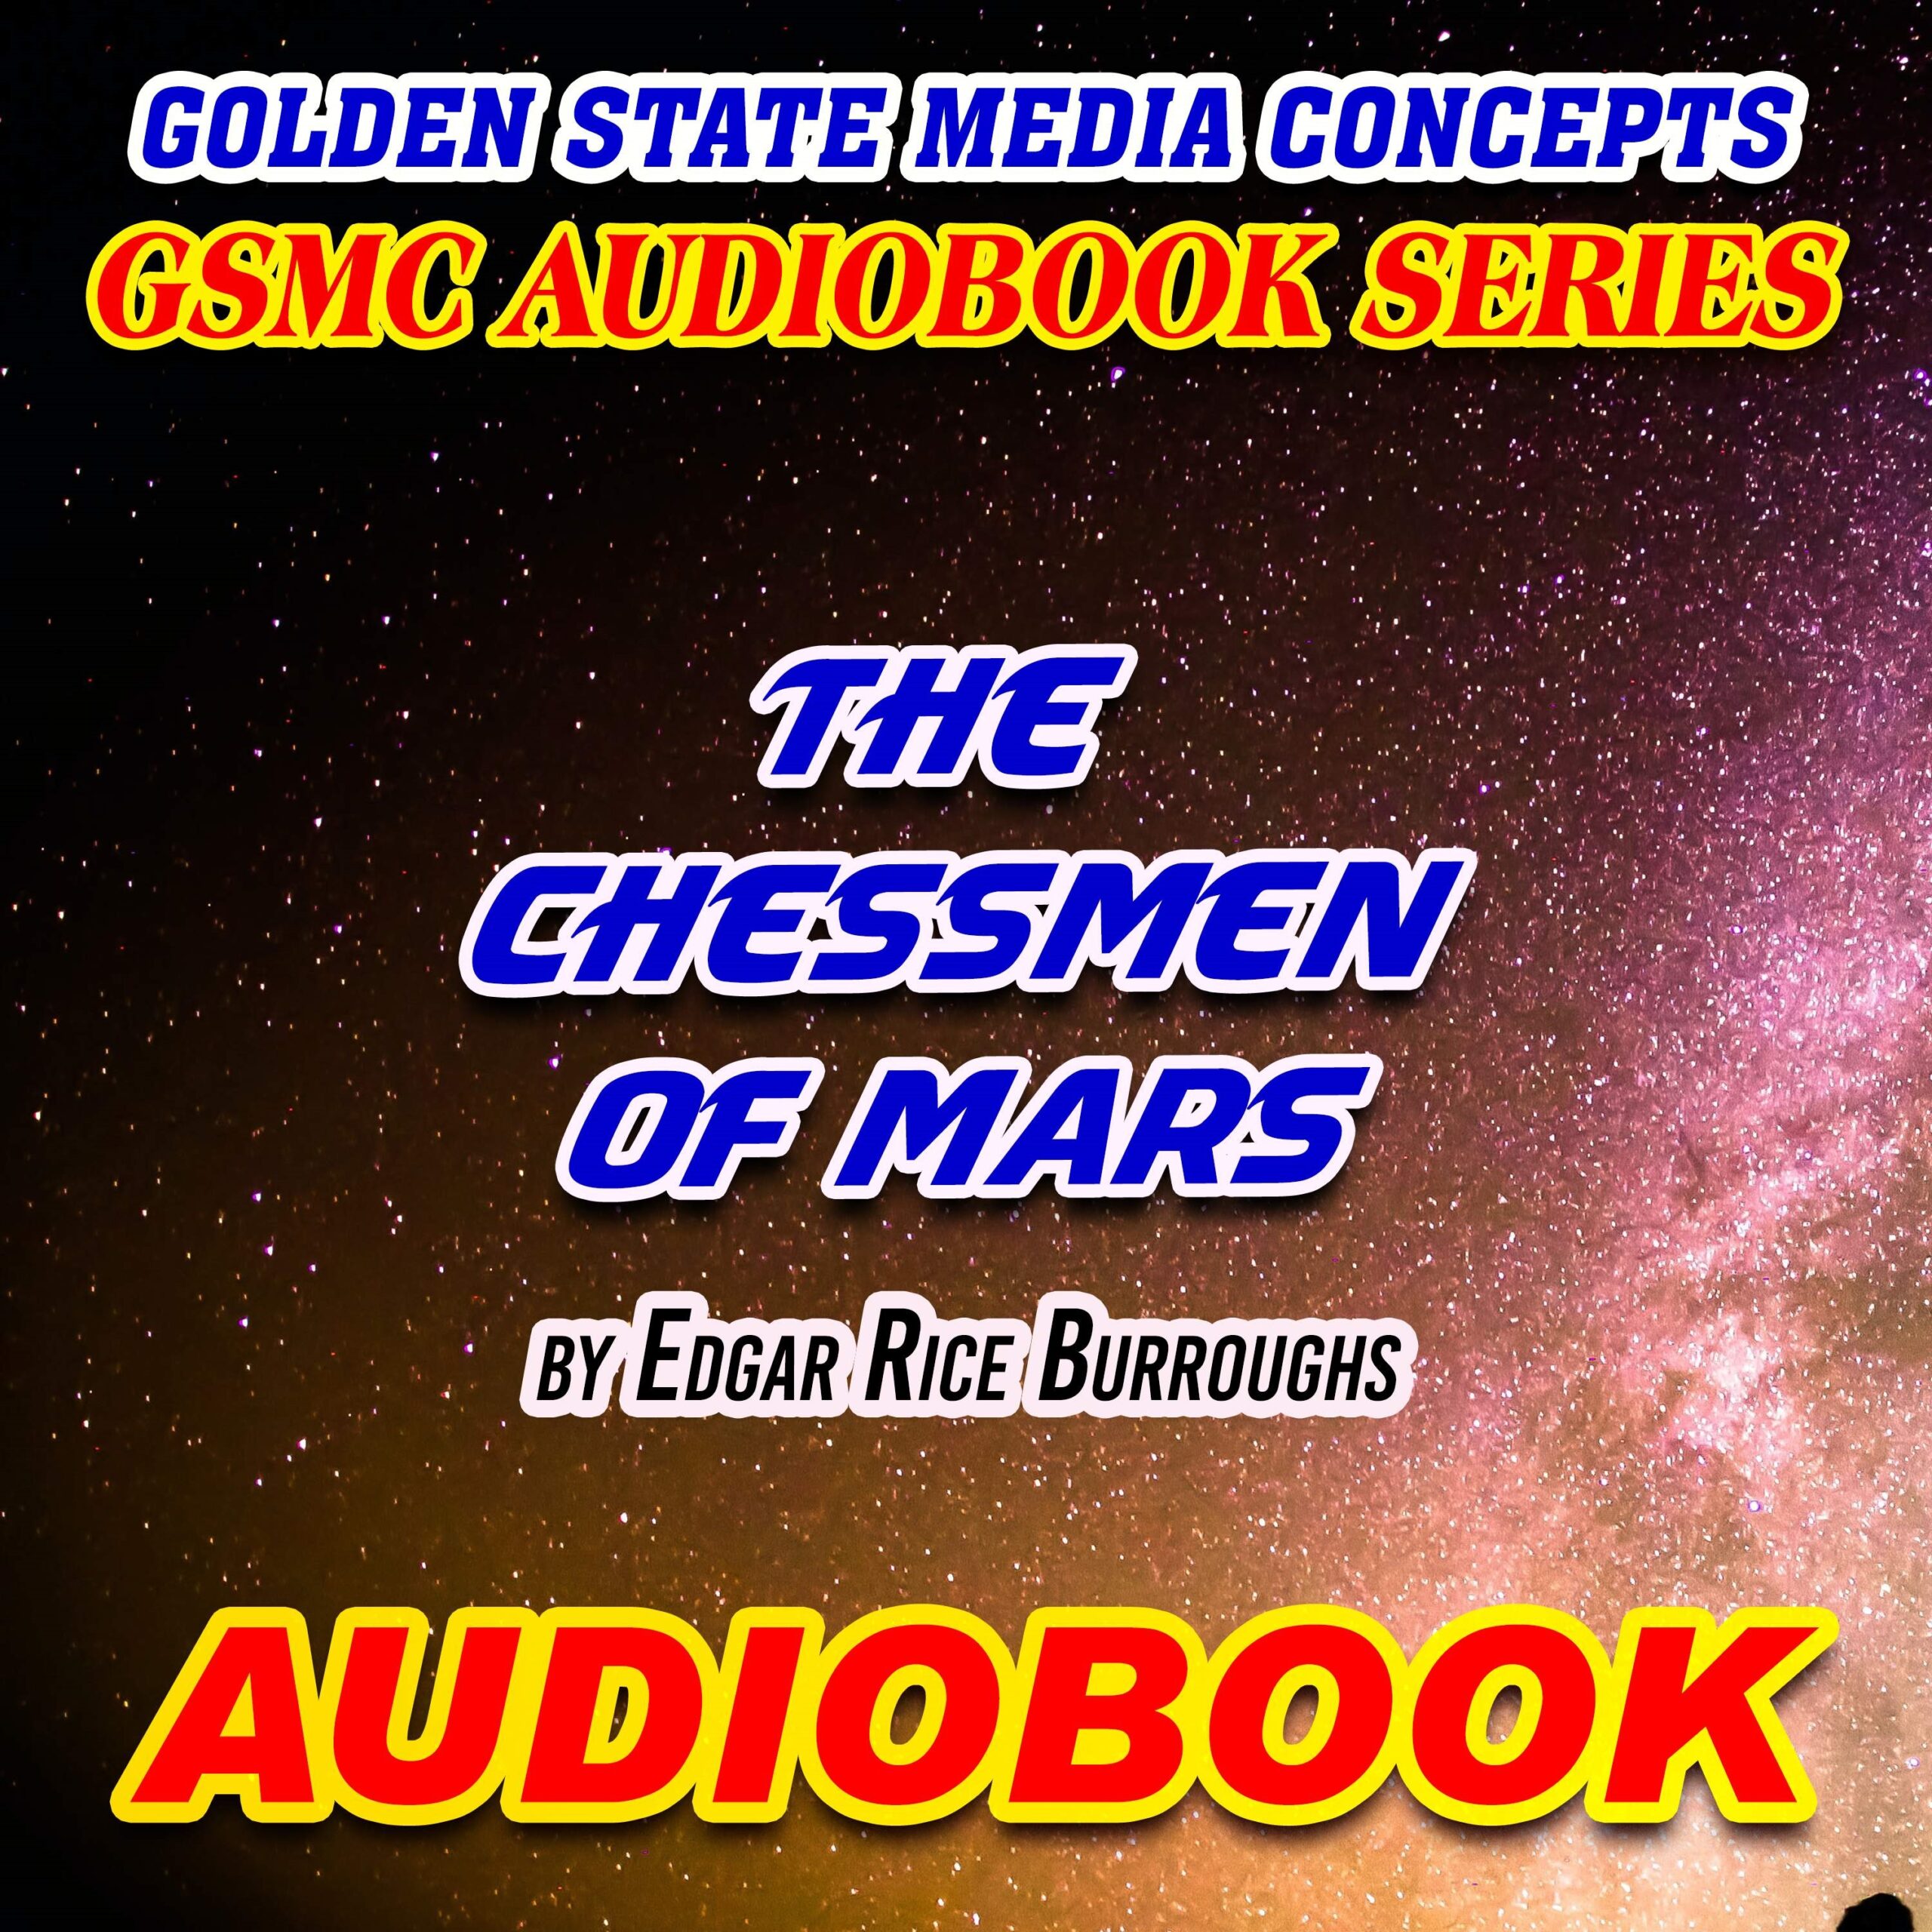 GSMC Audiobook Series: The Chessmen of Mars